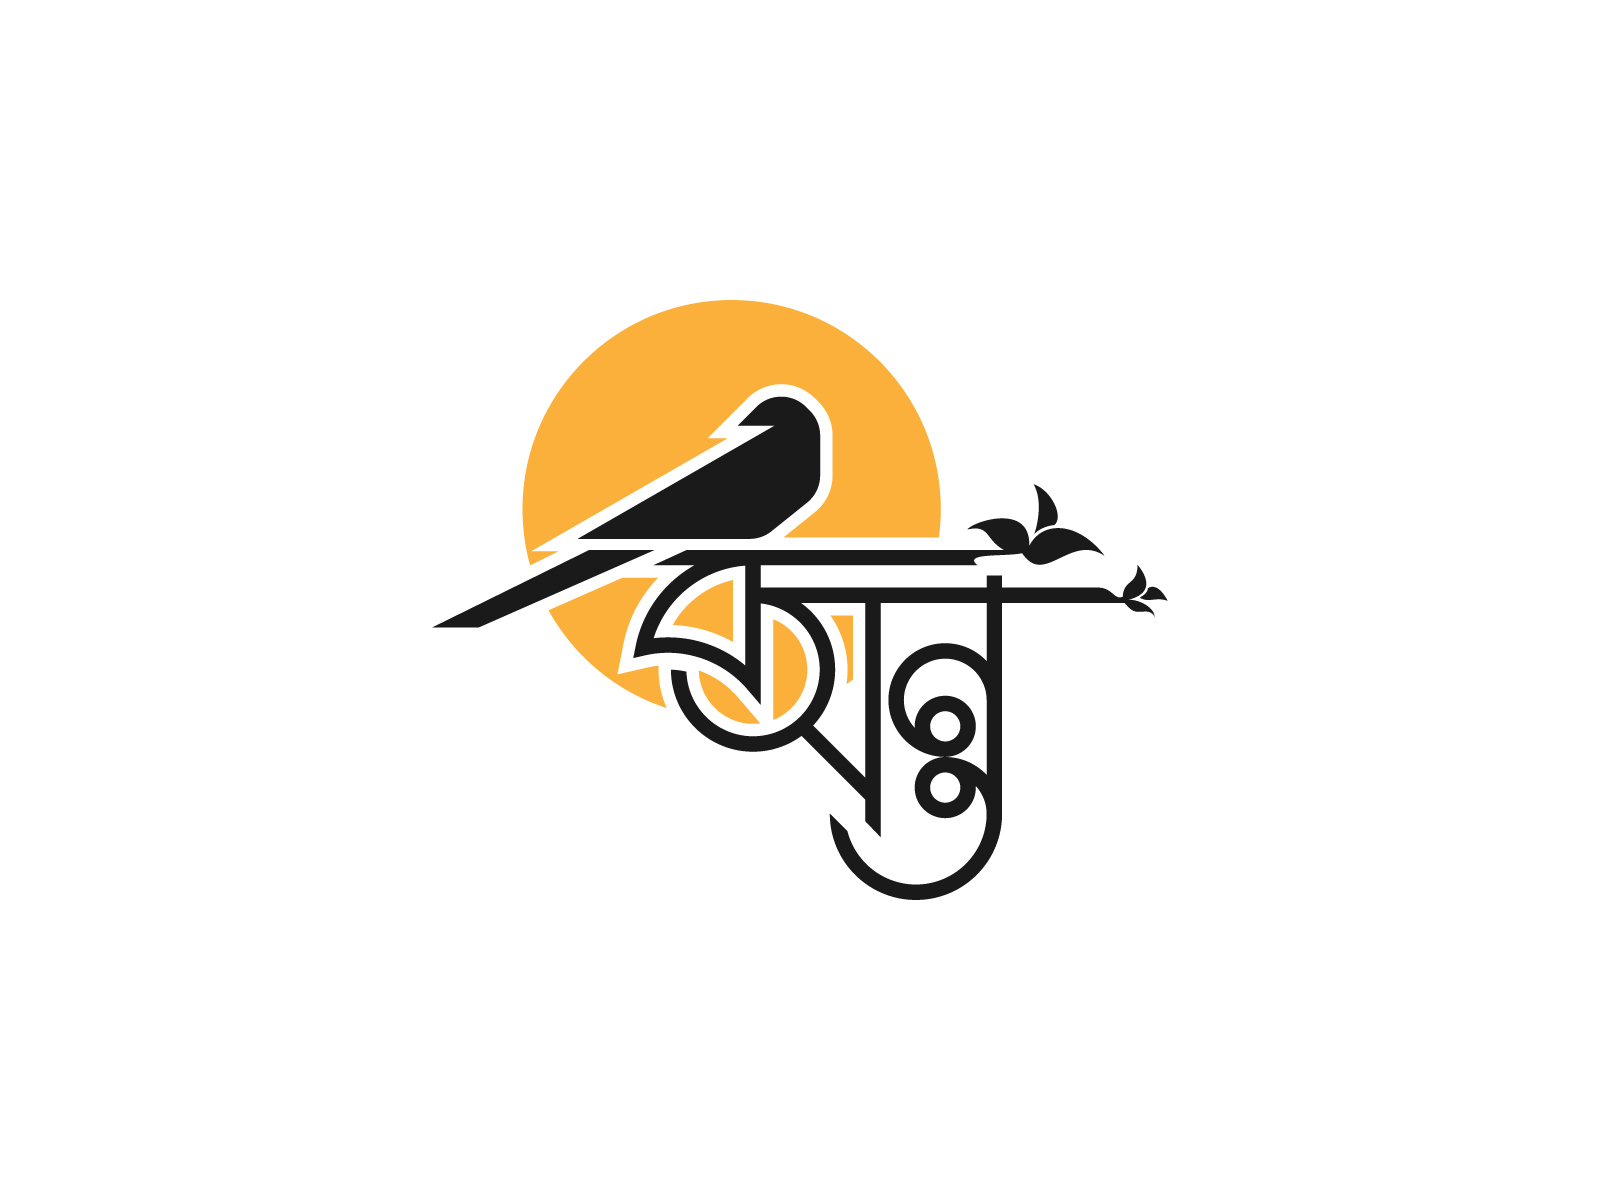 bangla logo design online free